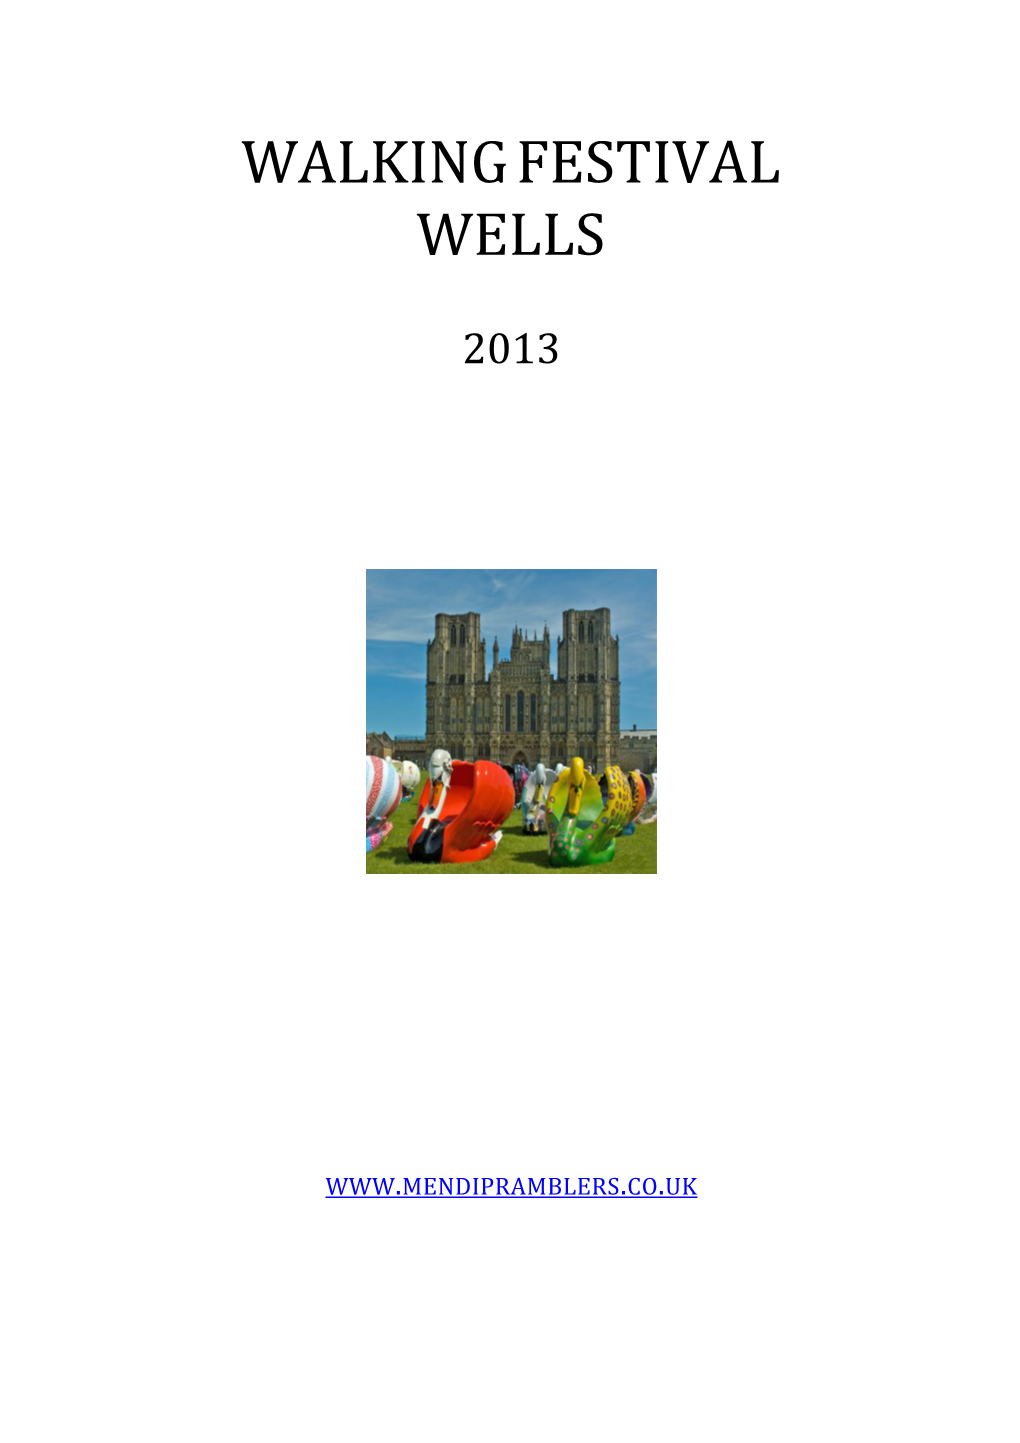 Walkingfestival Wells